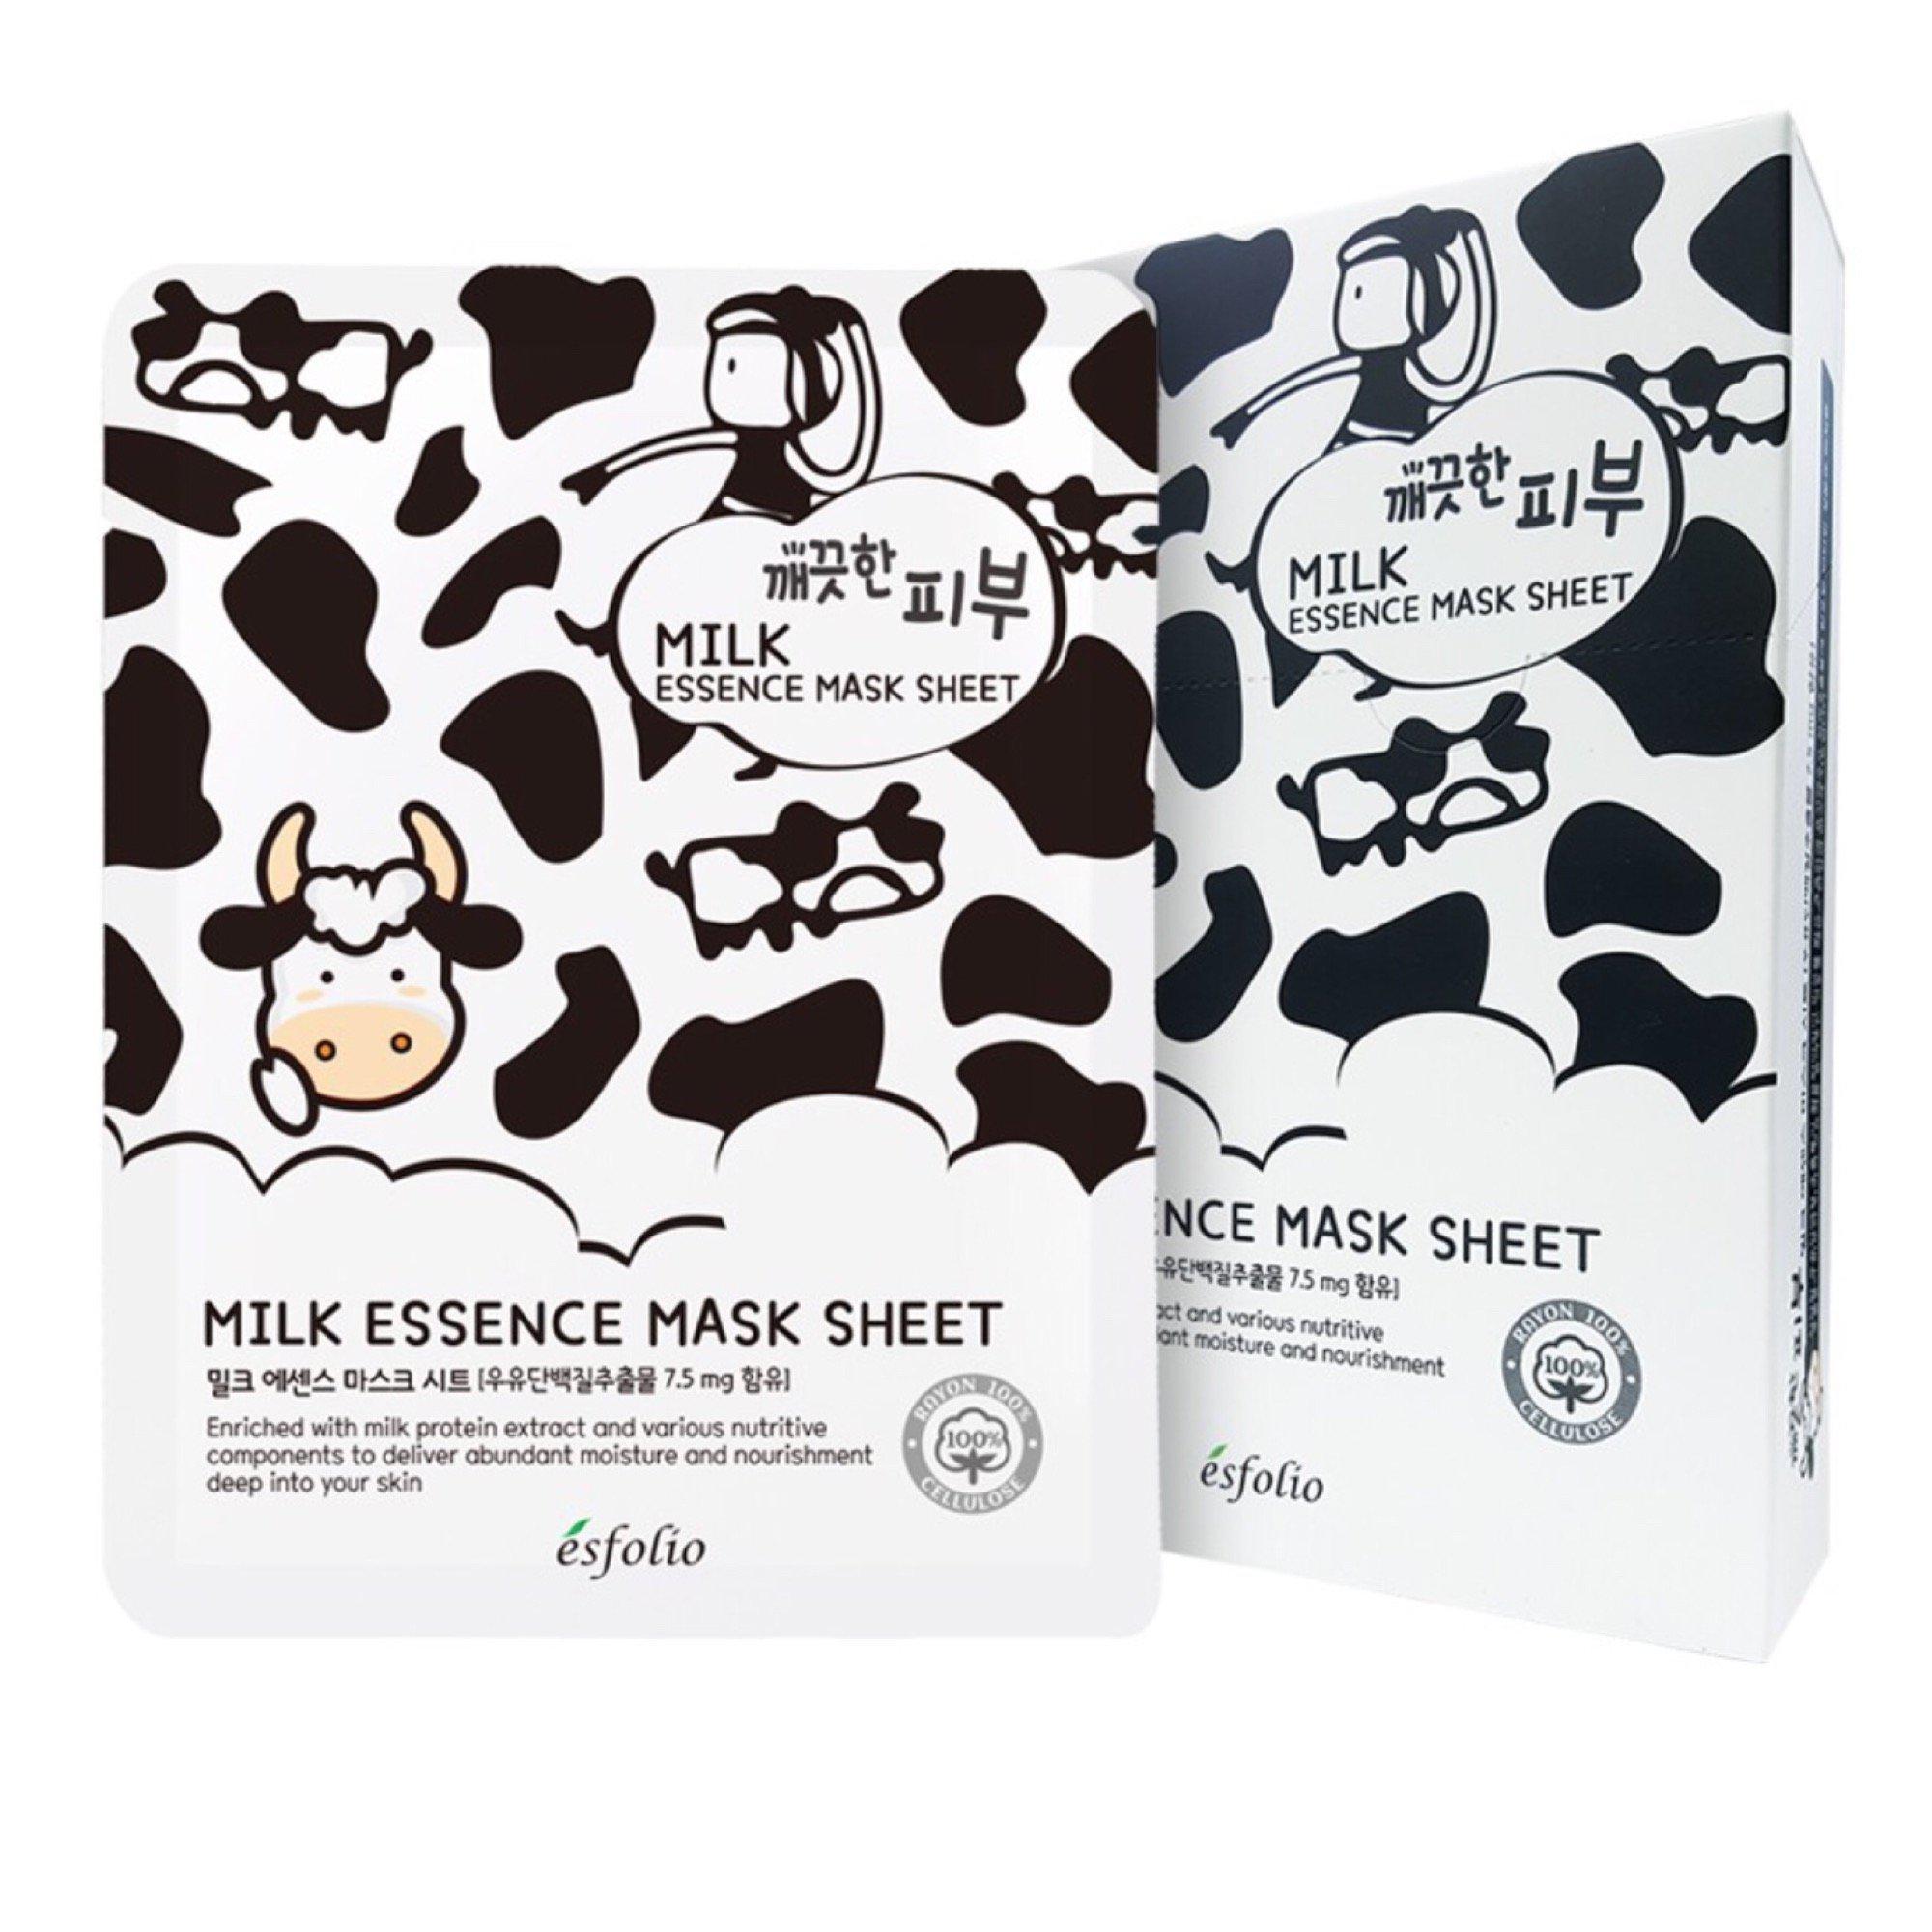 Clean Skin Essence Mask Sheet (Milk)